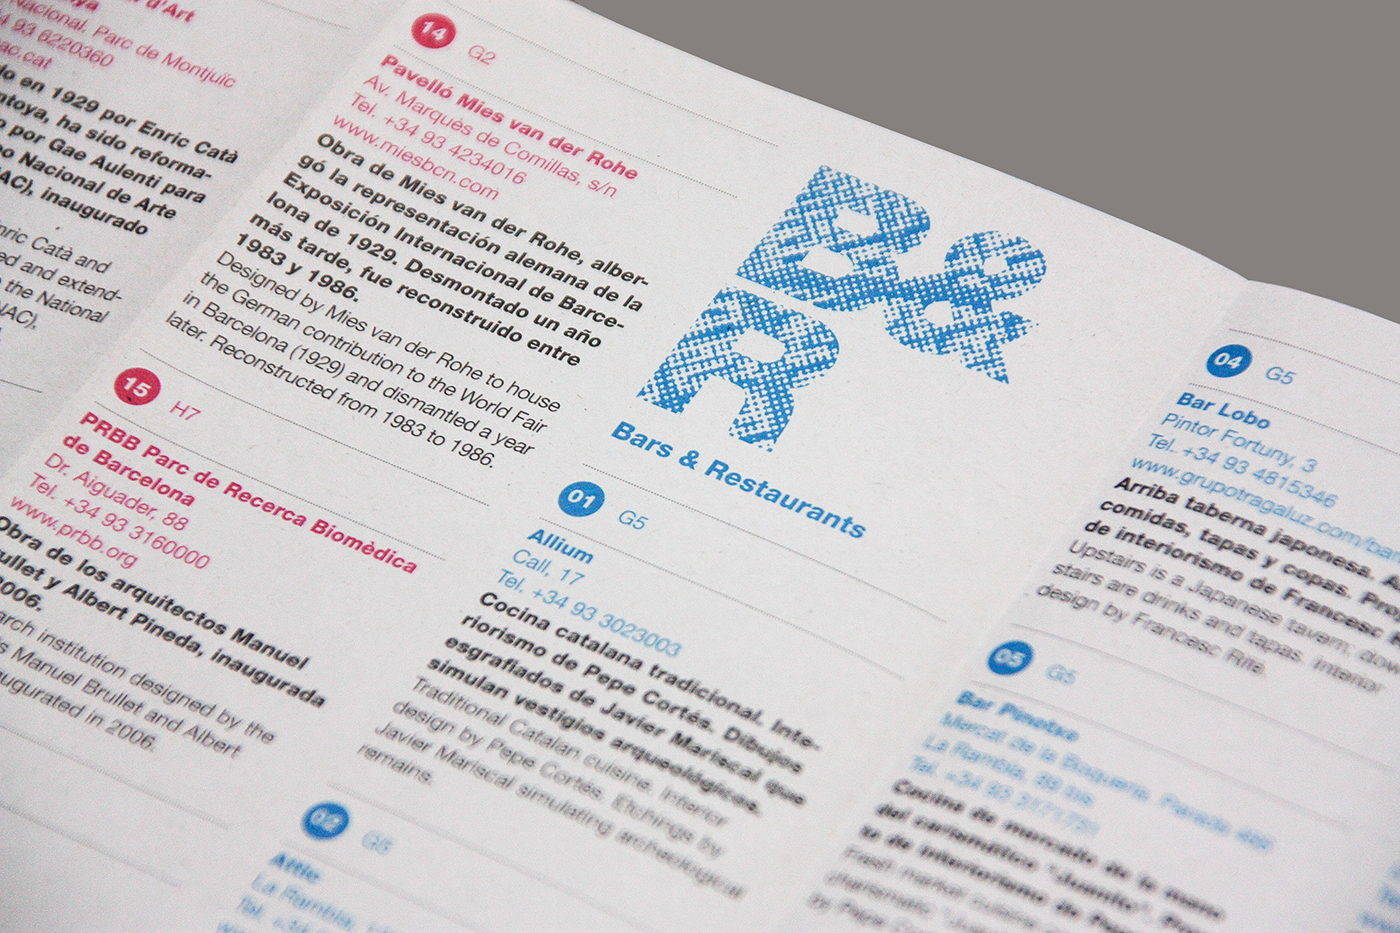 barcelona bcn Plan Guide plano guia tipography helvetica BCD brochure